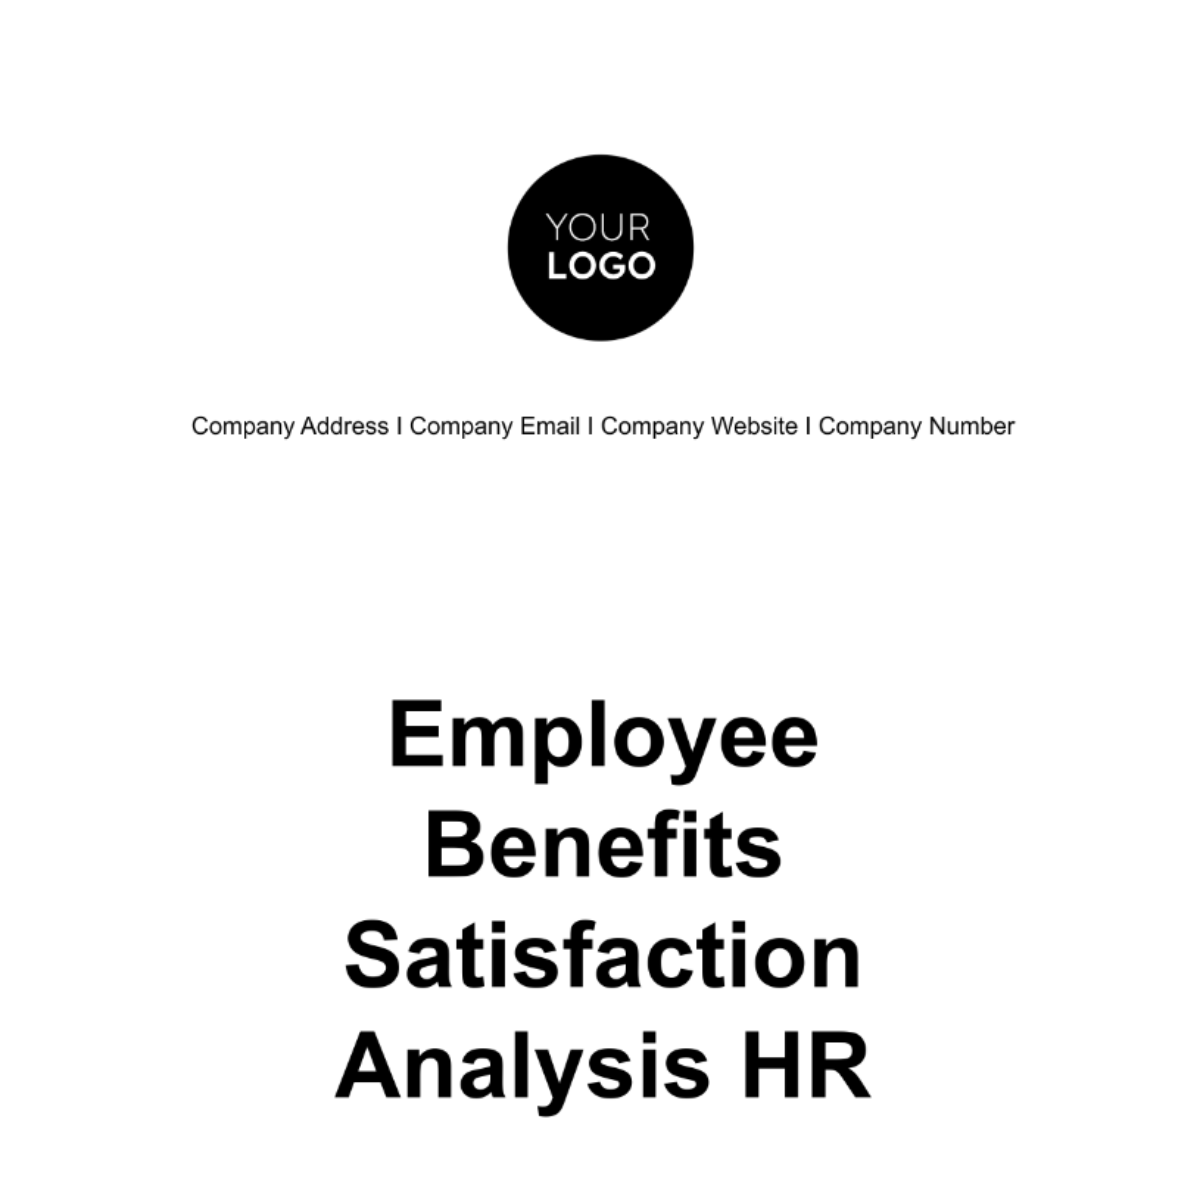 Employee Benefits Satisfaction Analysis HR Template